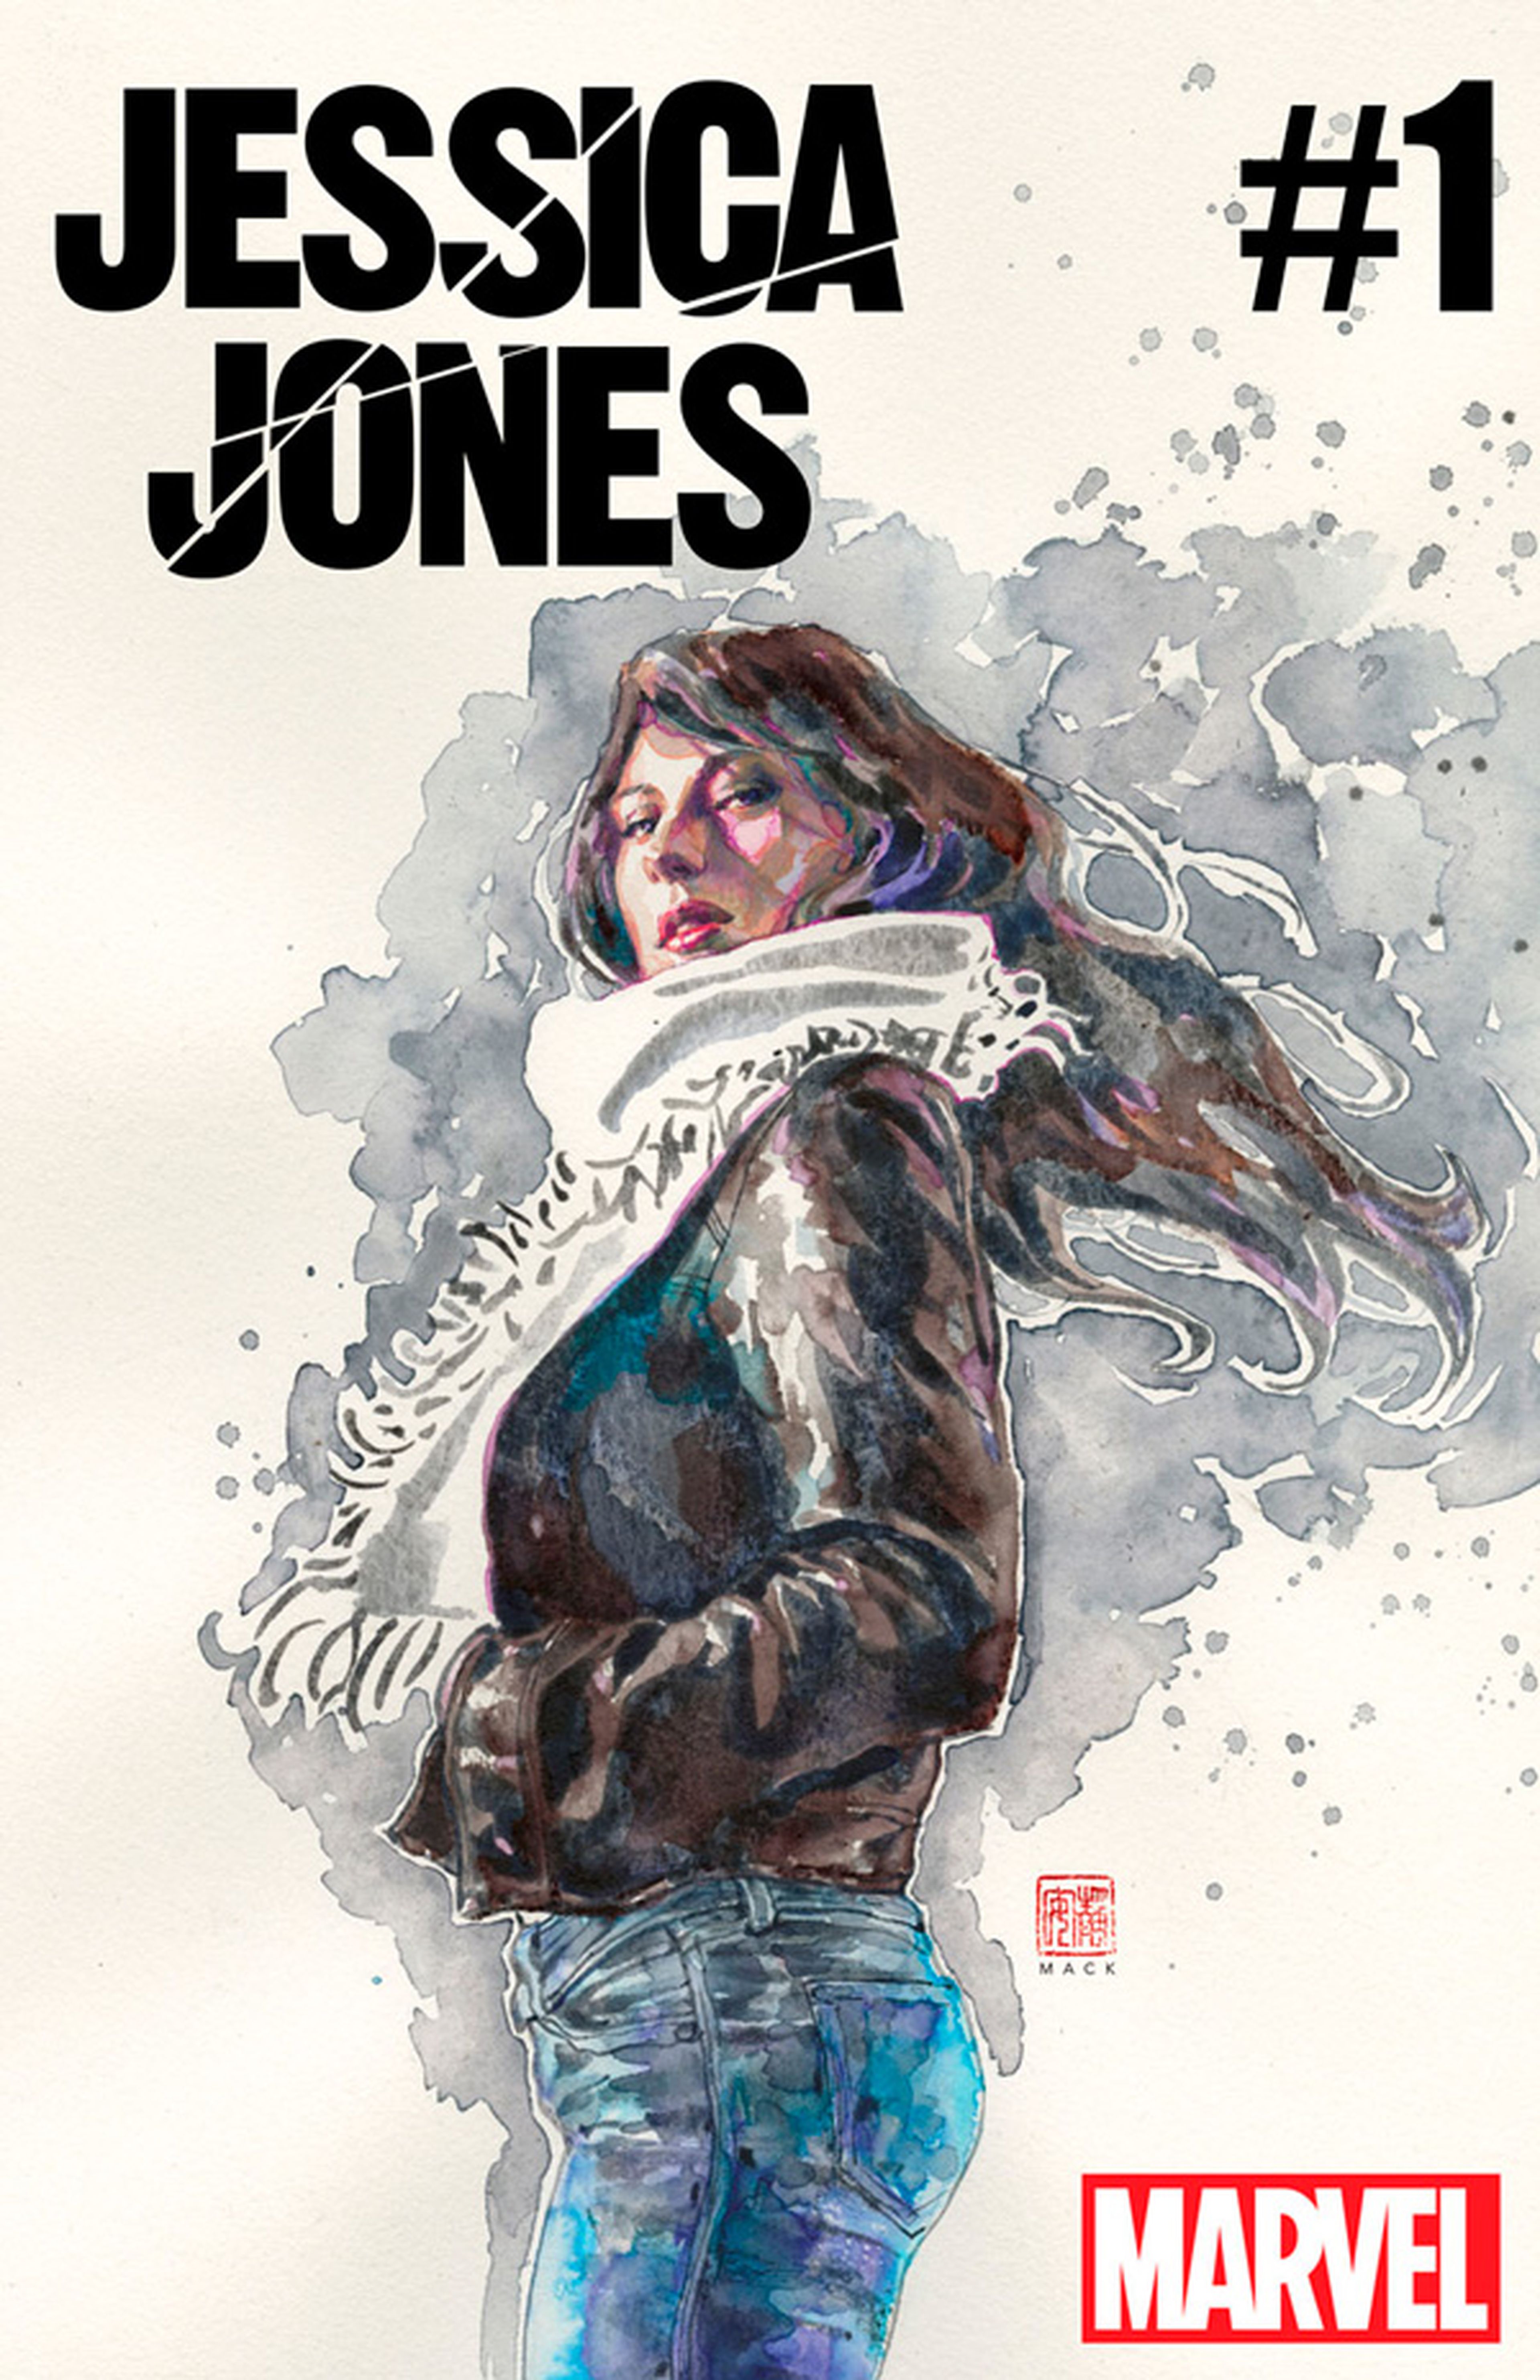 Jessica Jones portada cómic